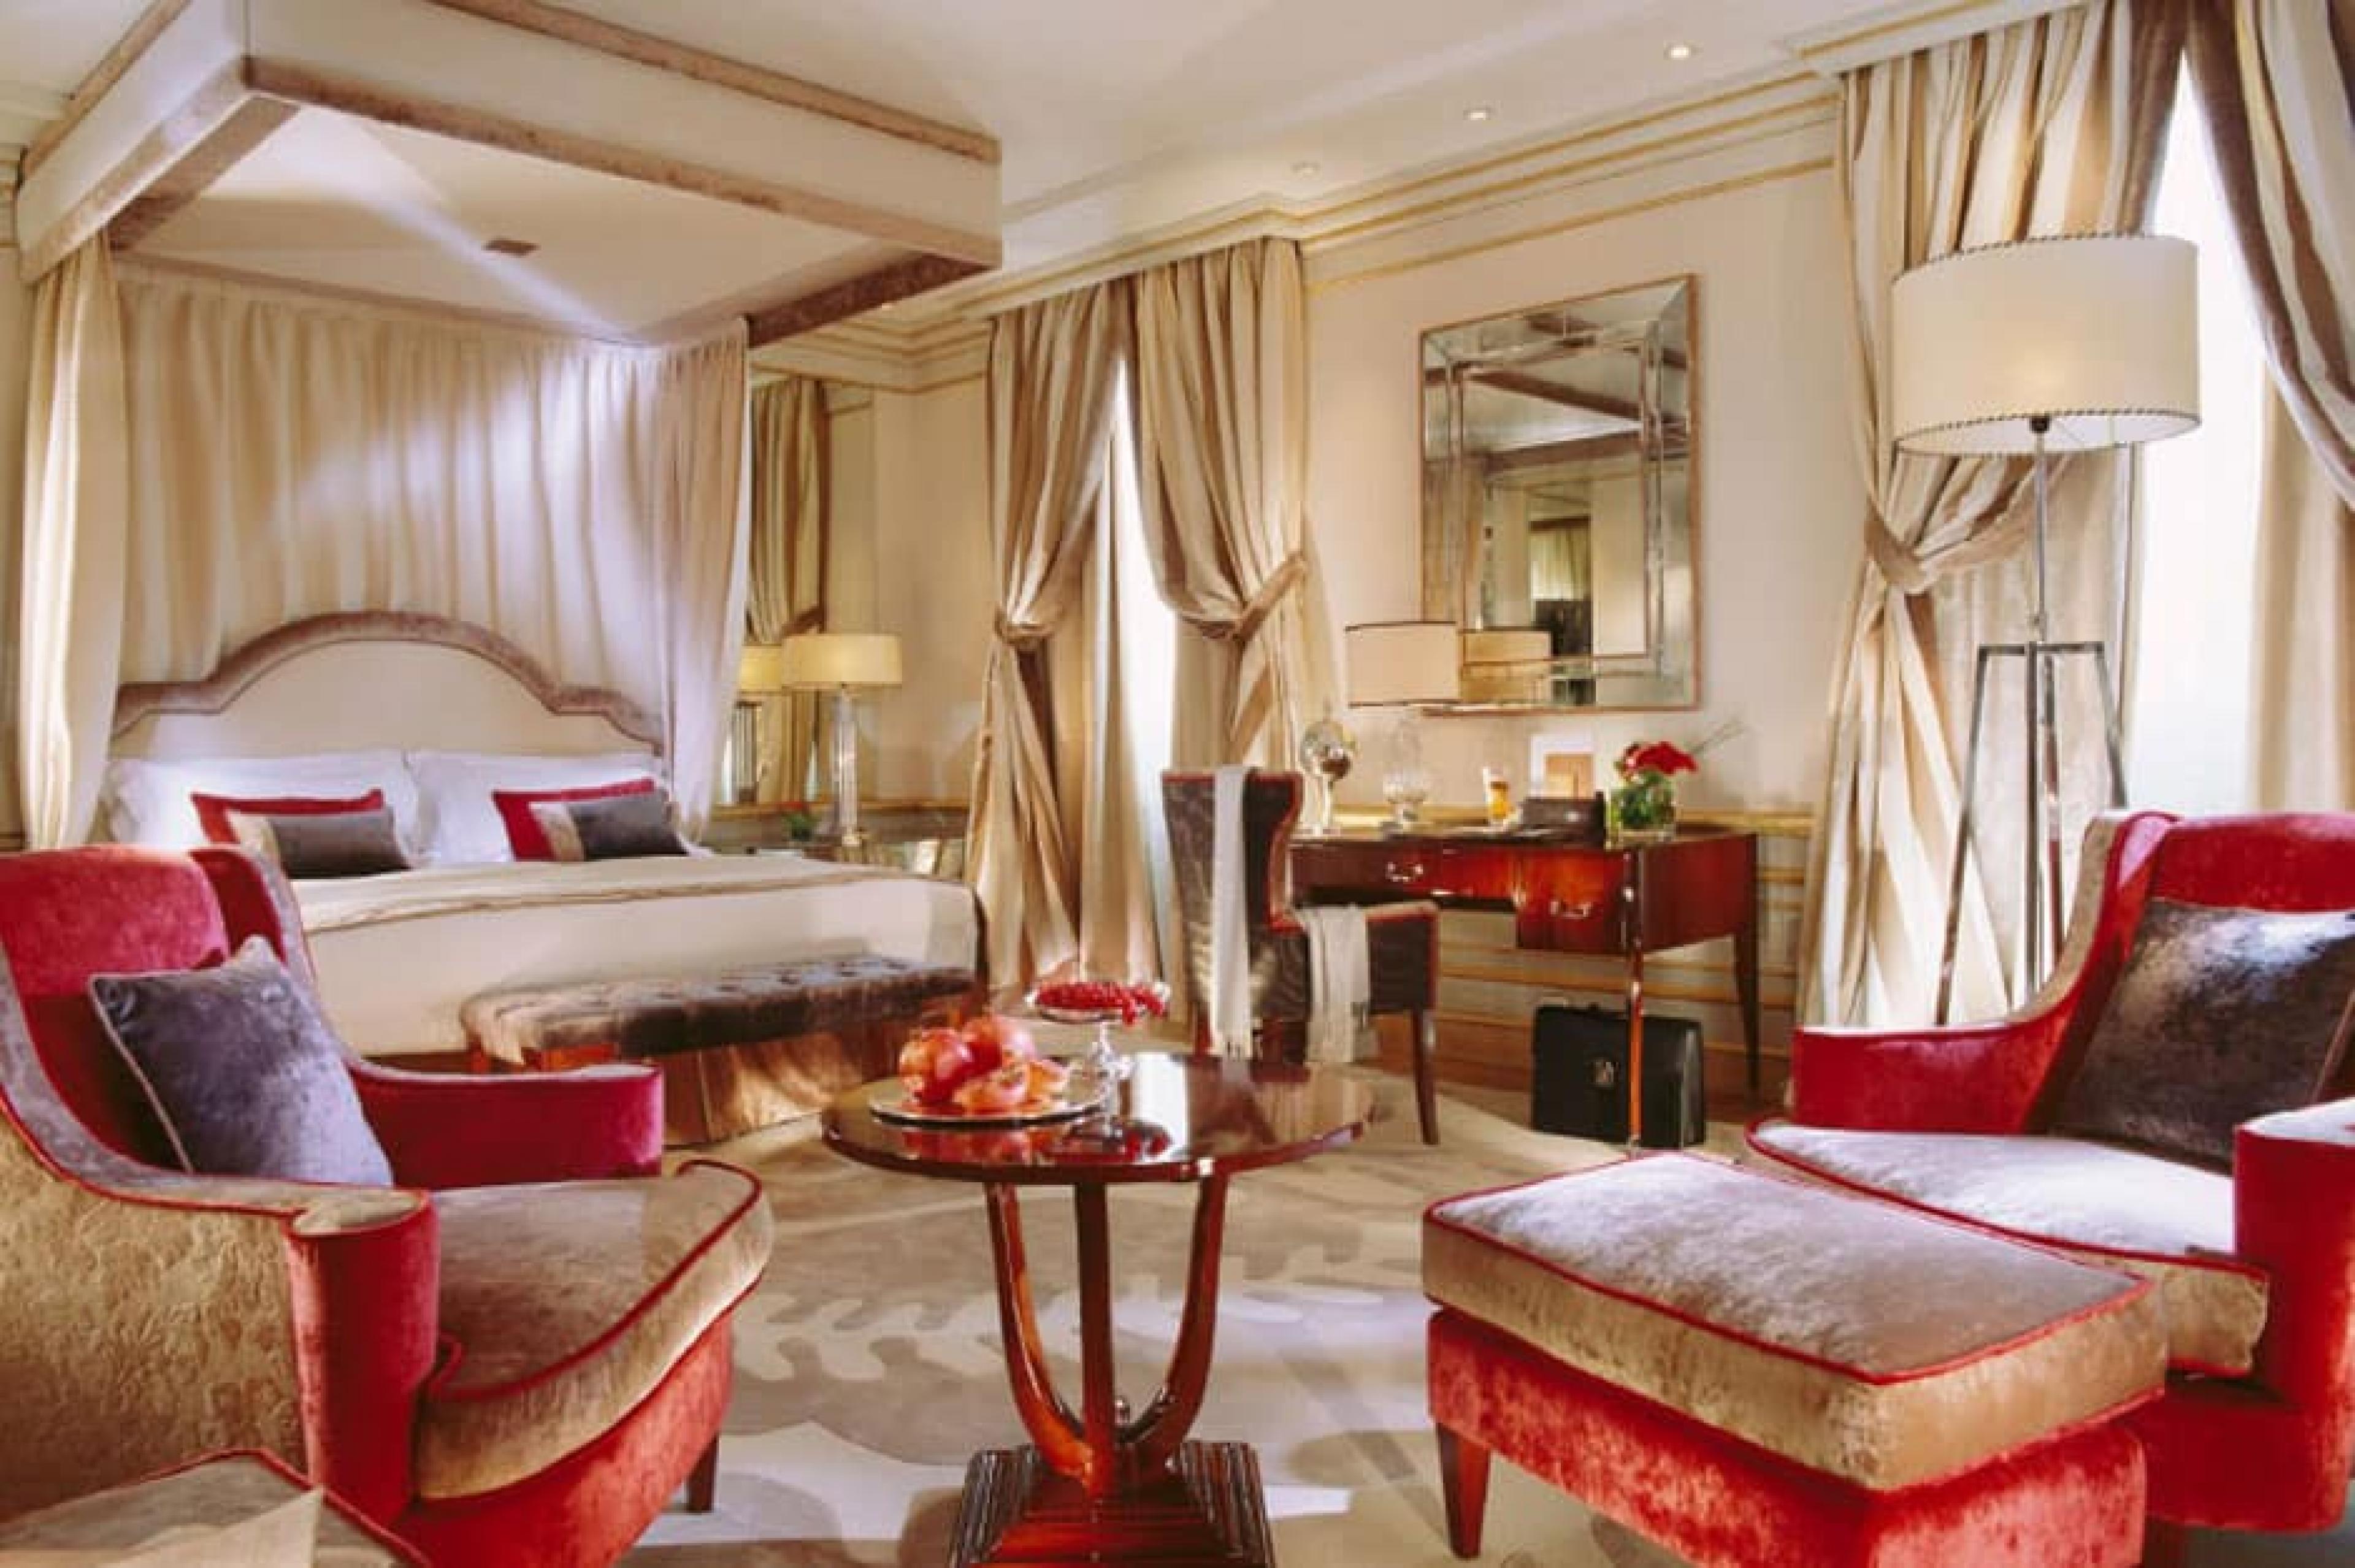 Imperial suite at Hotel Principe di Savoia, Milan, Italy